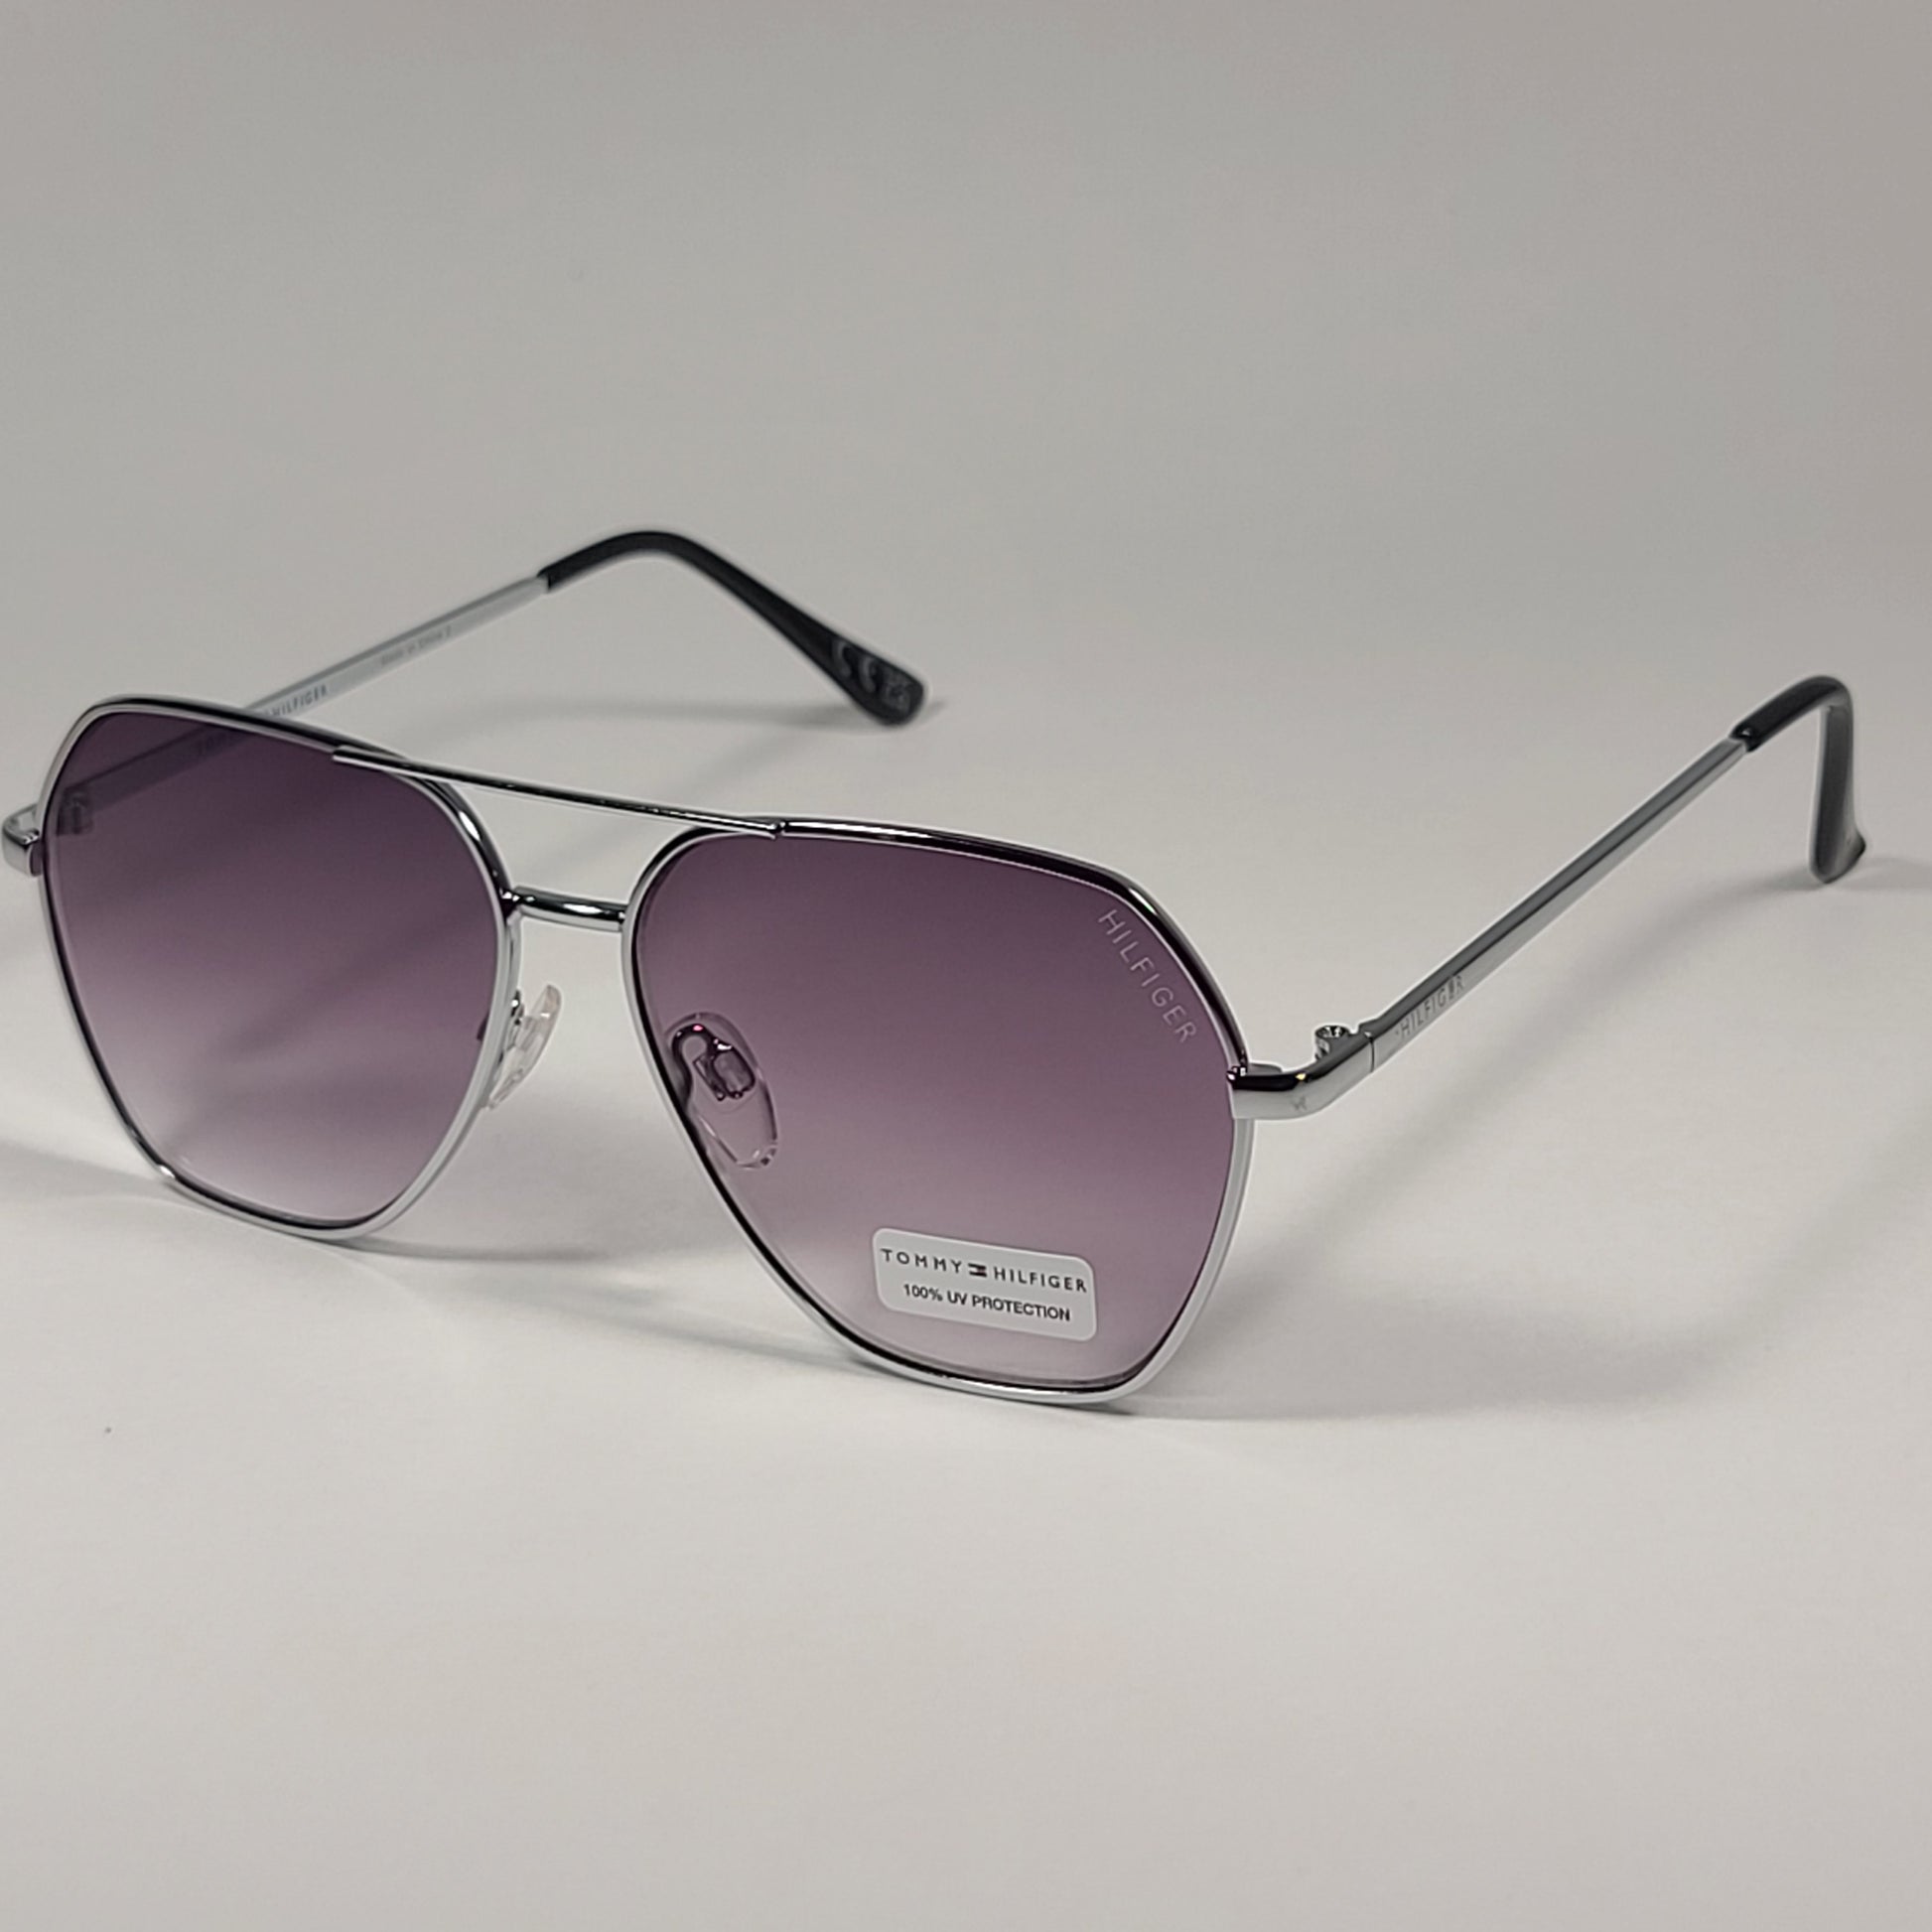 Tommy Hilfiger Noah Pentagon Pilot Sunglasses Silver Metal Smoke Gradient Lens NOAH WM OL568 - Sunglasses